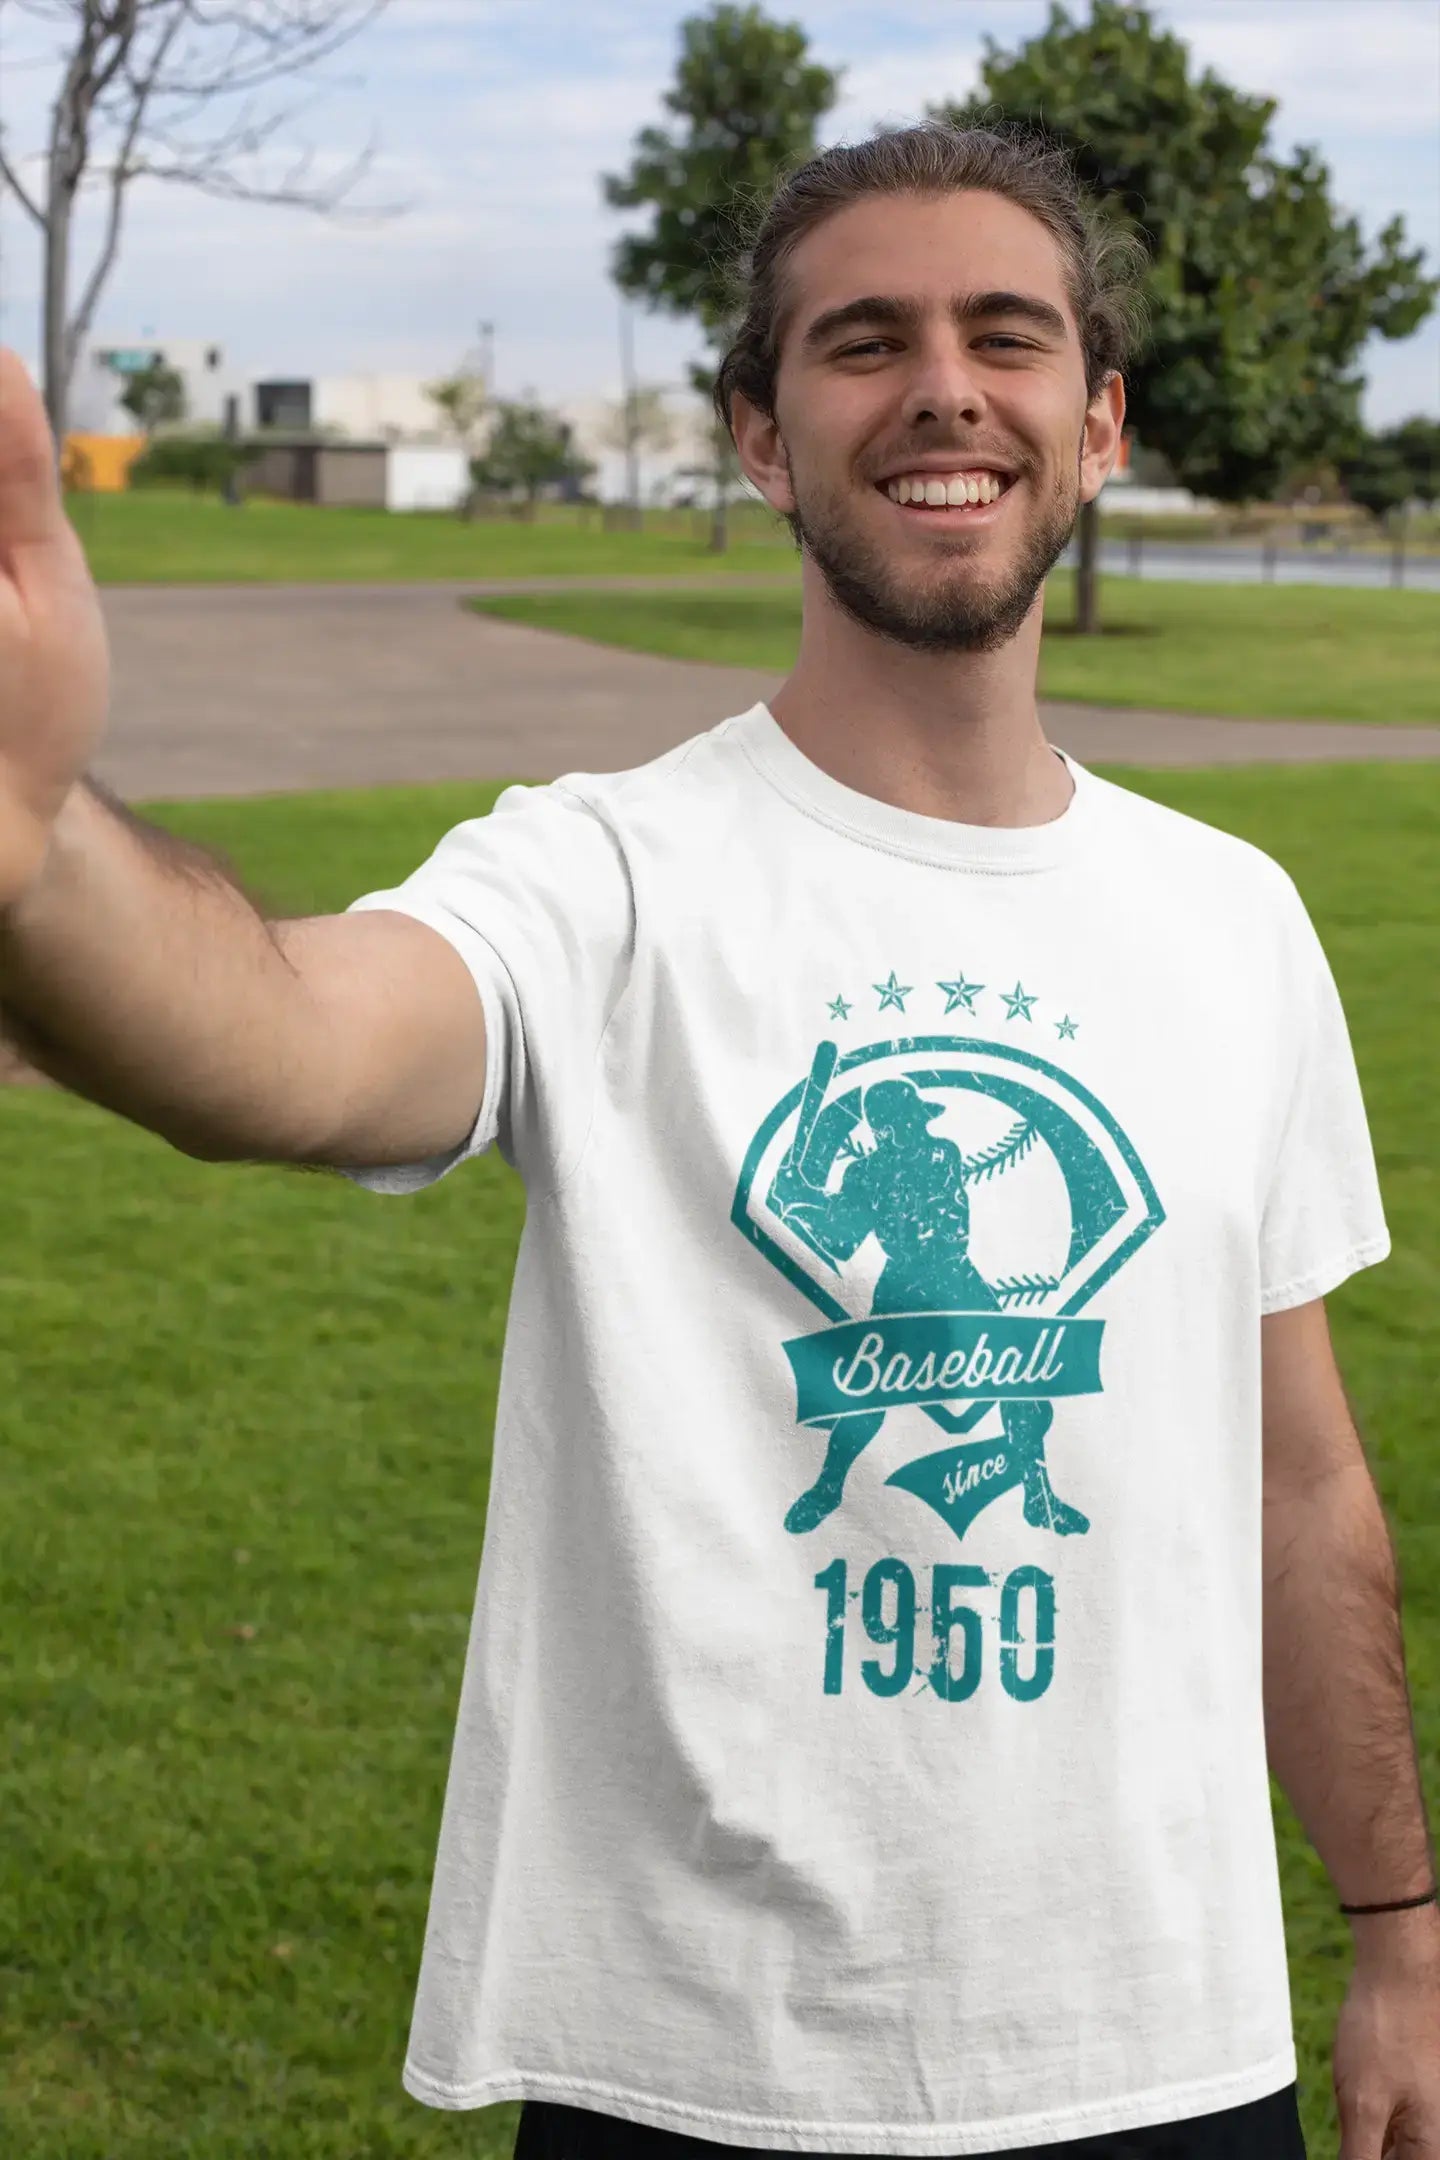 Men's Vintage Tee Shirt Graphic T shirt Baseball Since 1950 White